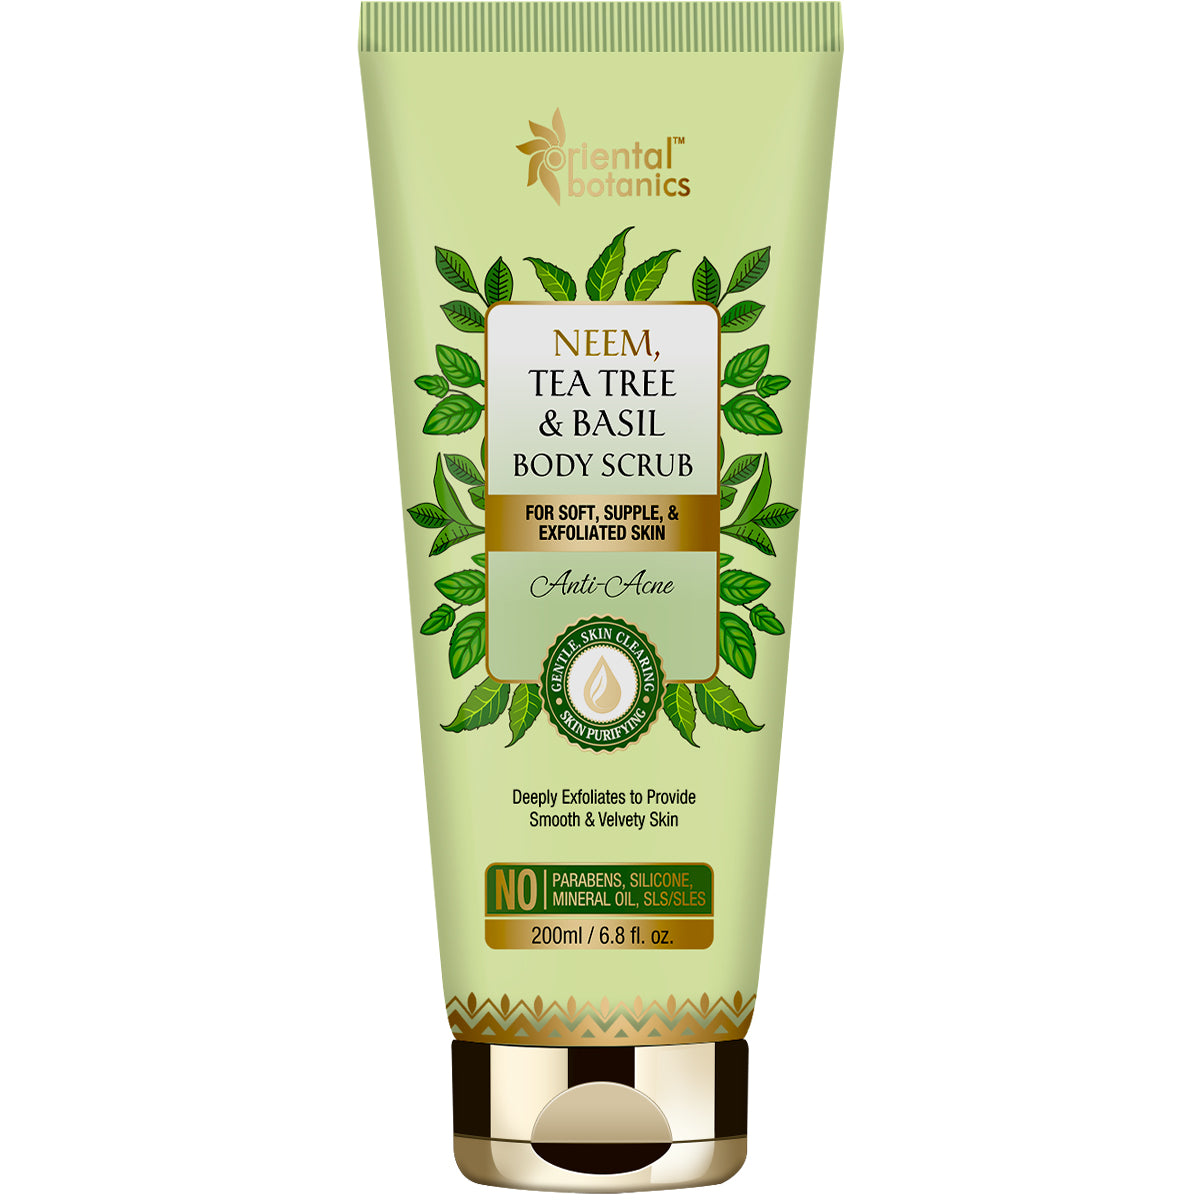 Oriental Botanics Neem, Tea Tree and Basil Anti Acne Body Scrub - For Soft, Supple and Exfoliated Skin - No Parabens, Silicones, 200 ml